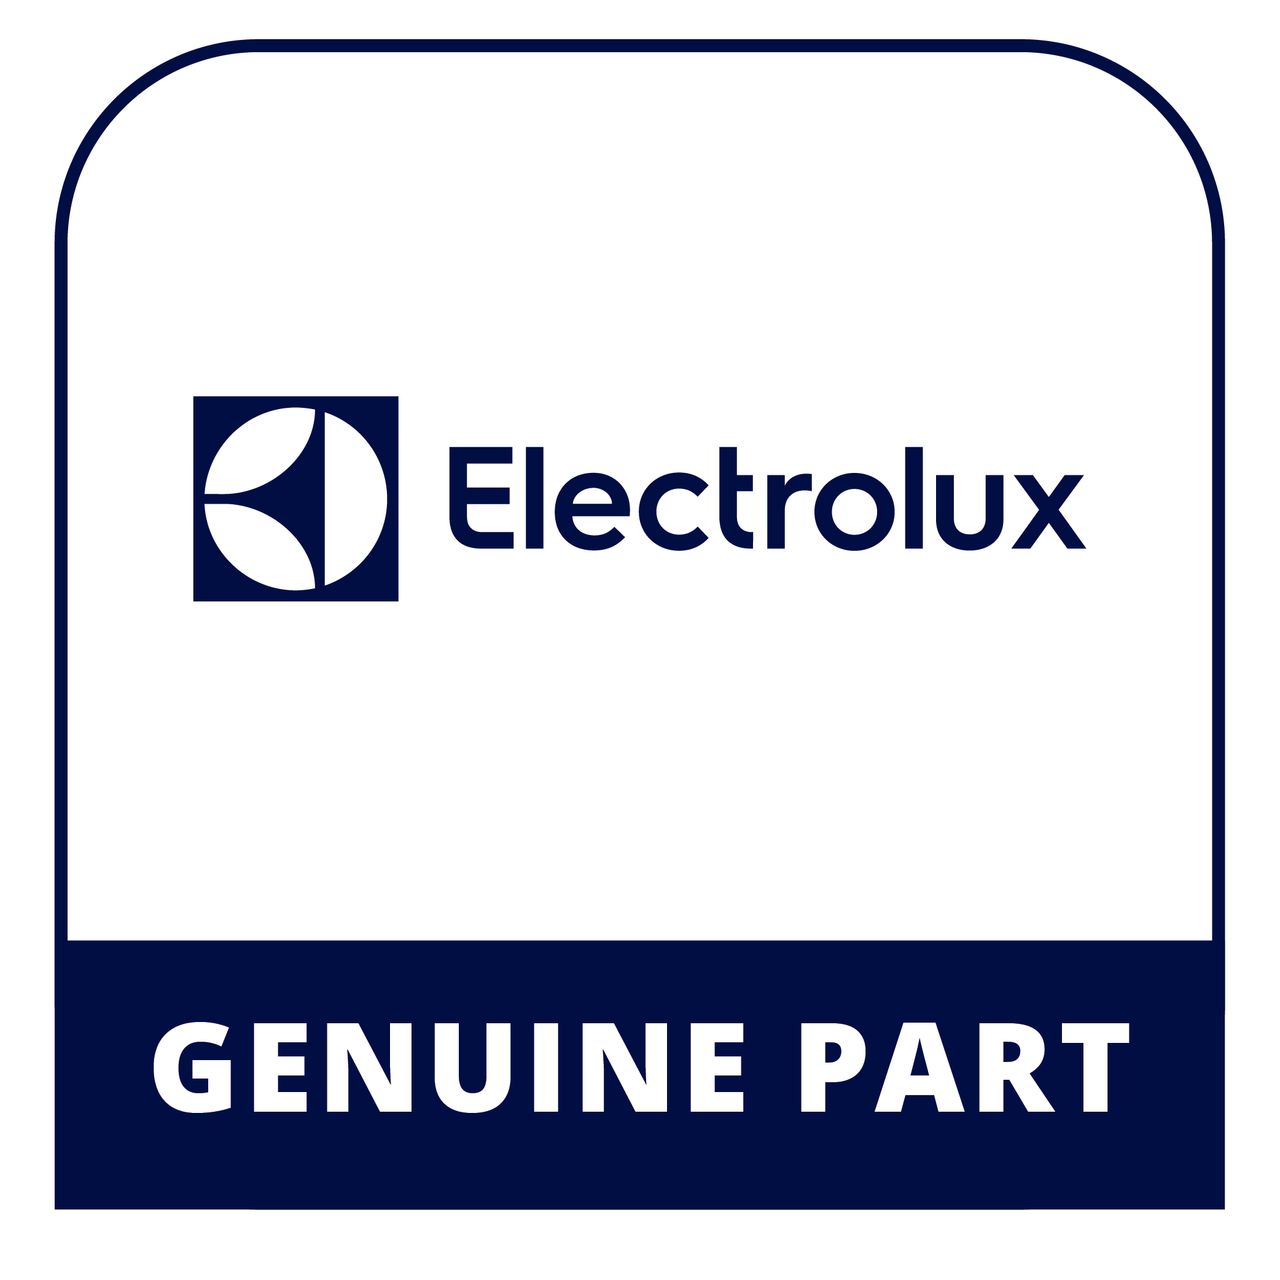 Frigidaire - Electrolux 316578340 Board - Genuine Electrolux Part